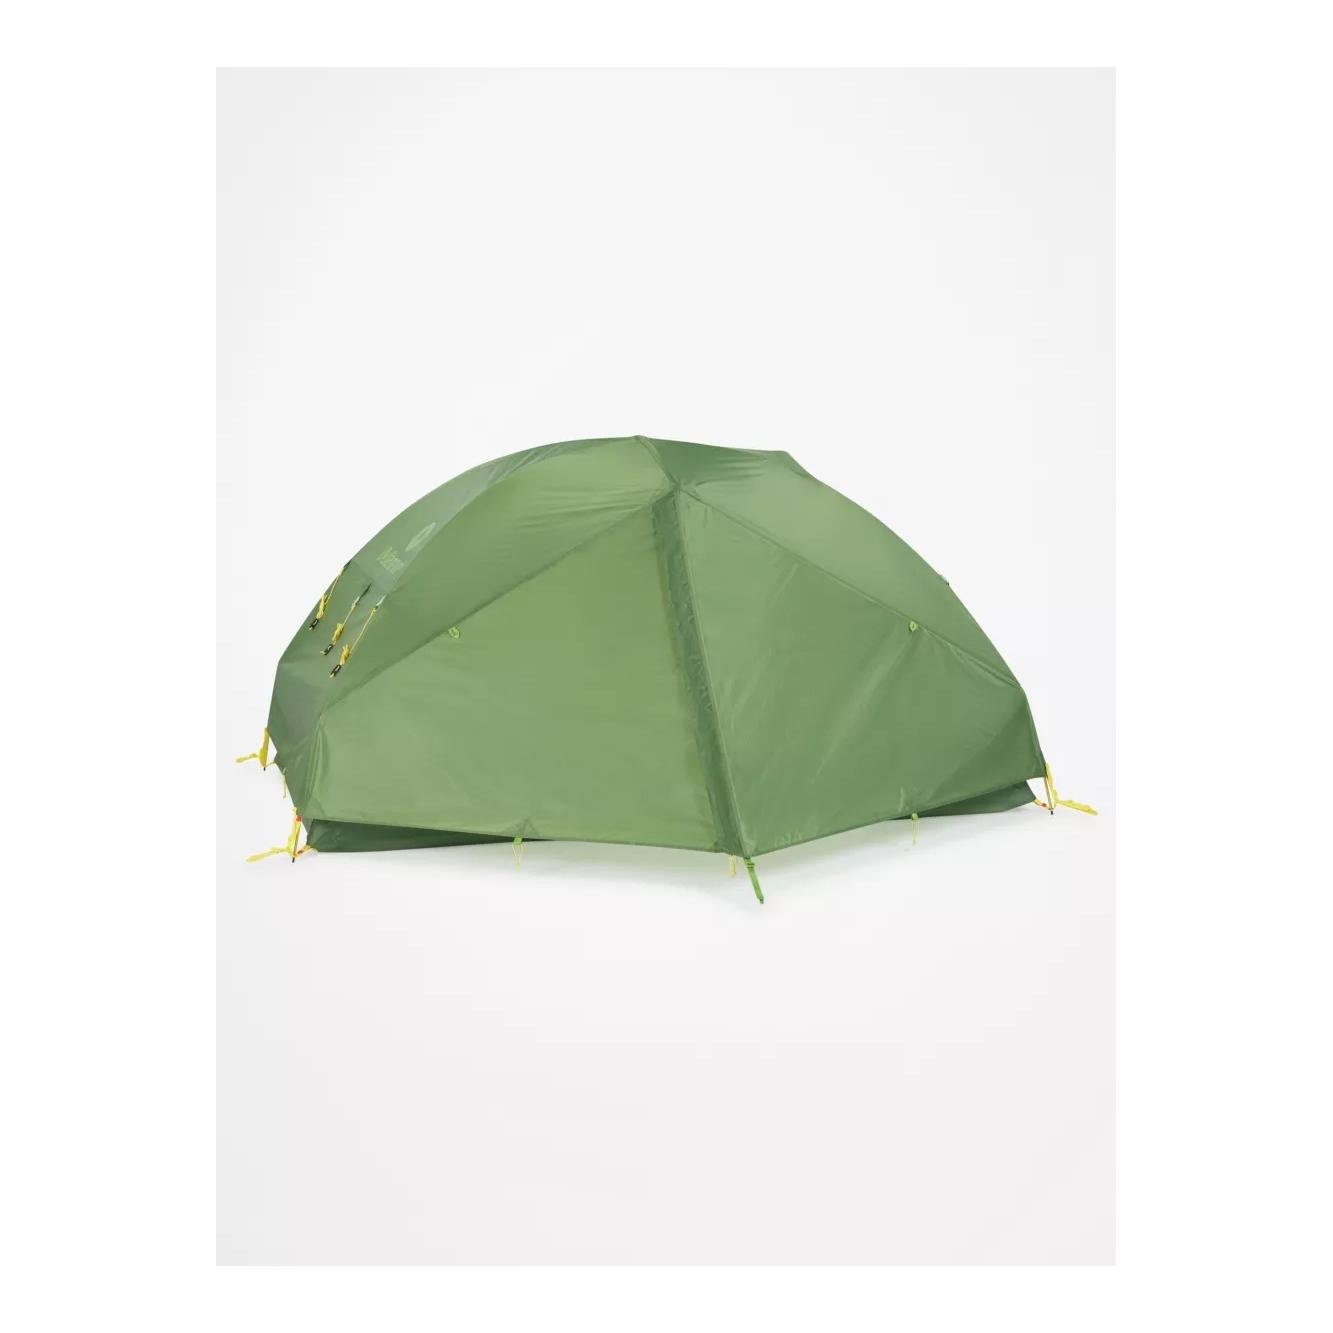 Marmot Vapor 2P tent